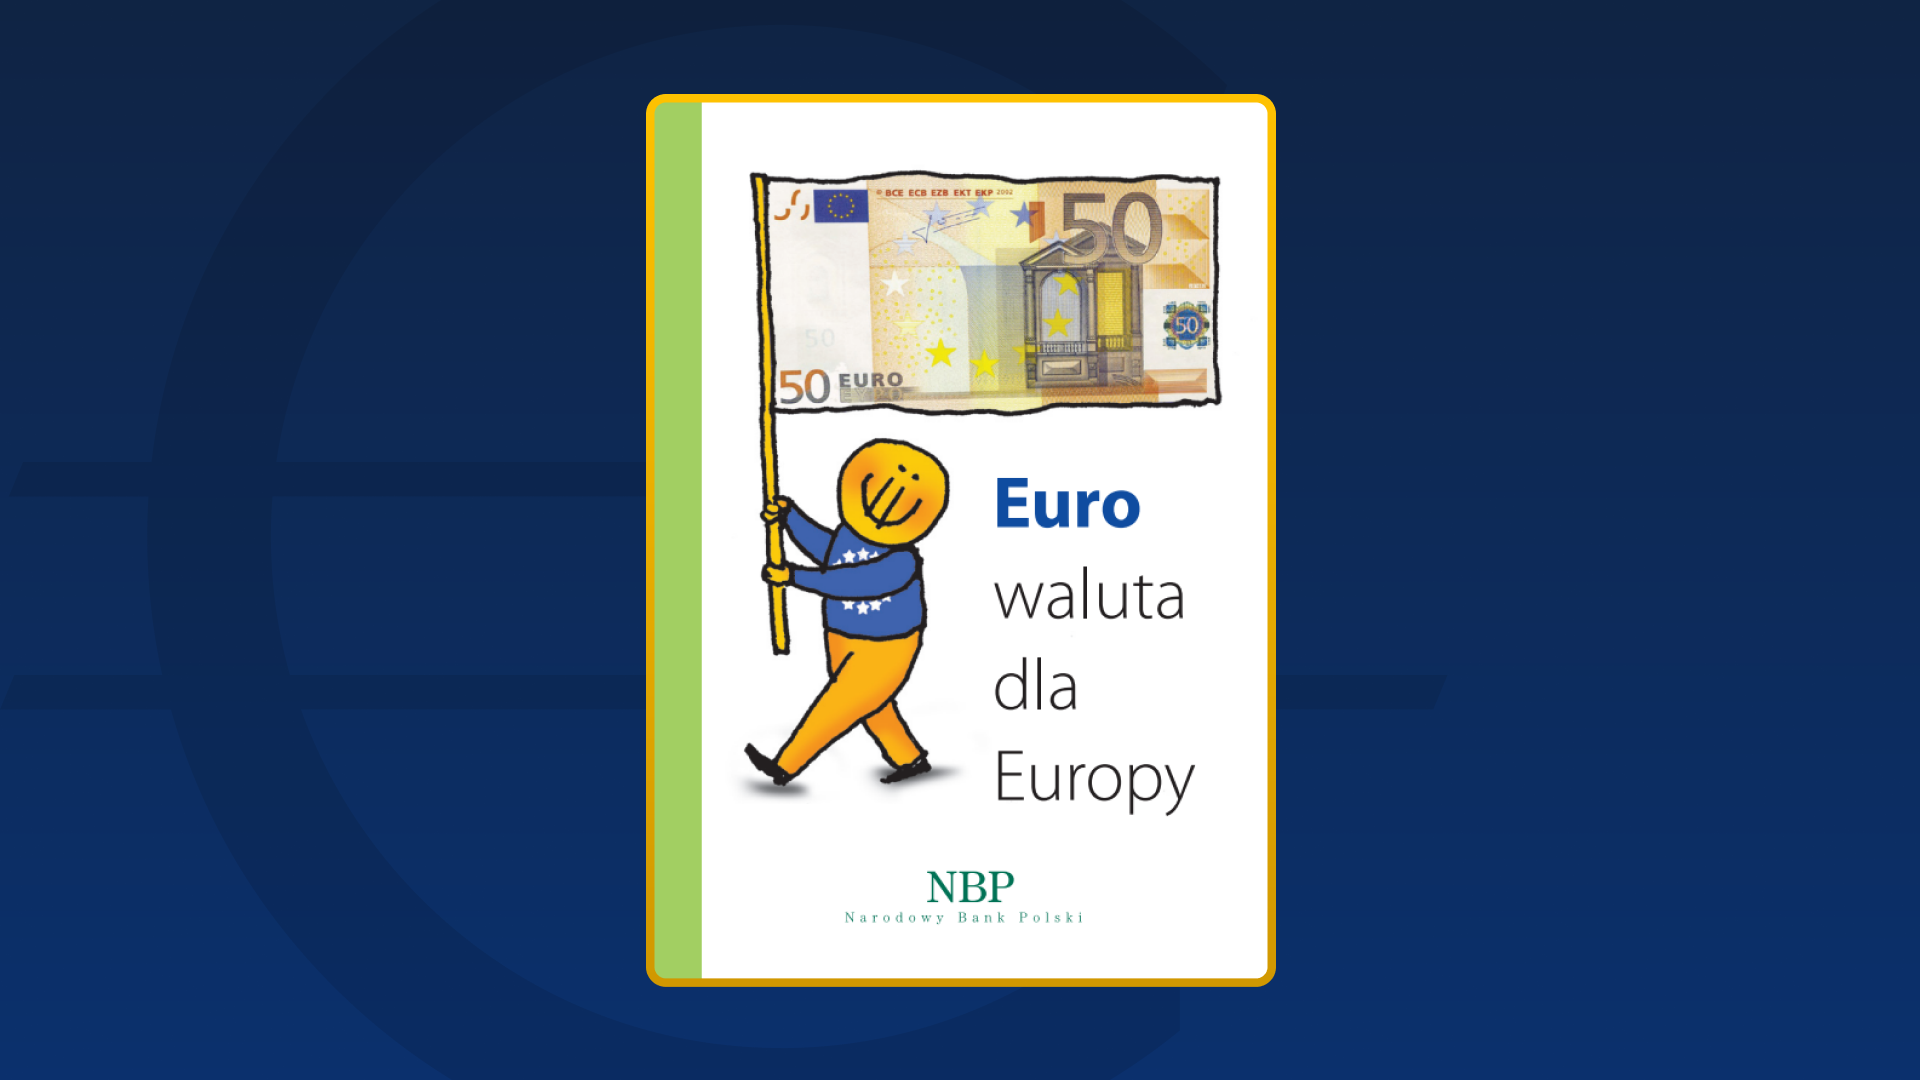 Euro. Waluta dla Europy (2012)